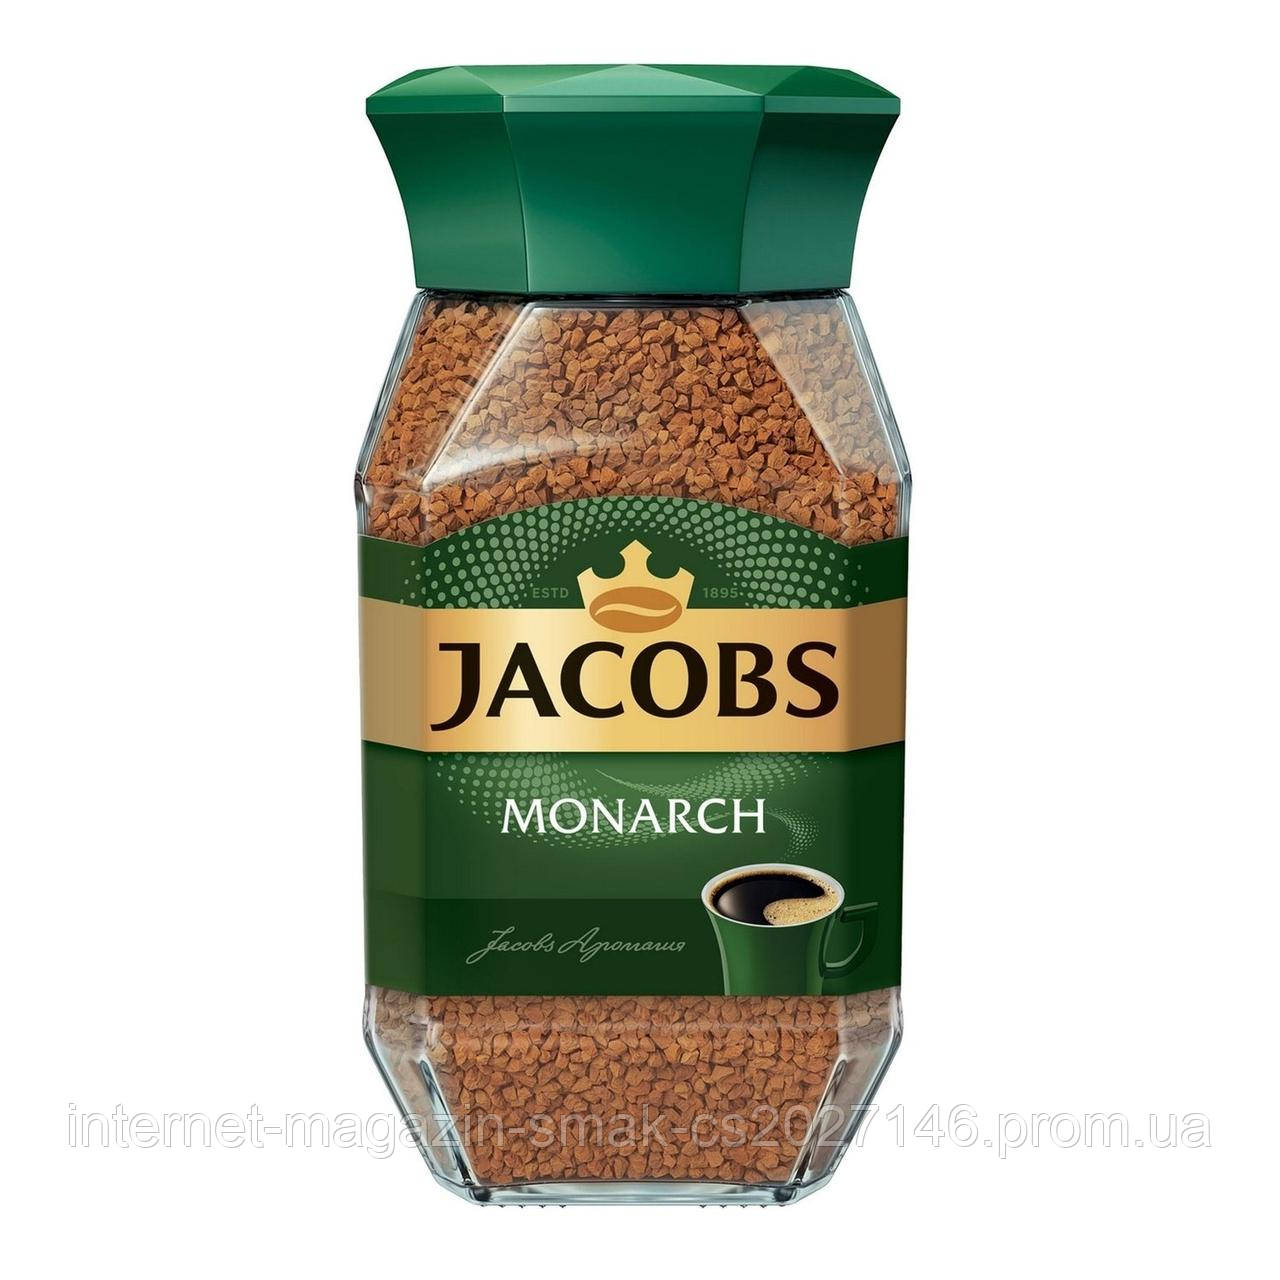 Кава розчинна Jacobs Monarch / Якобс Монарх с/б, 48 г